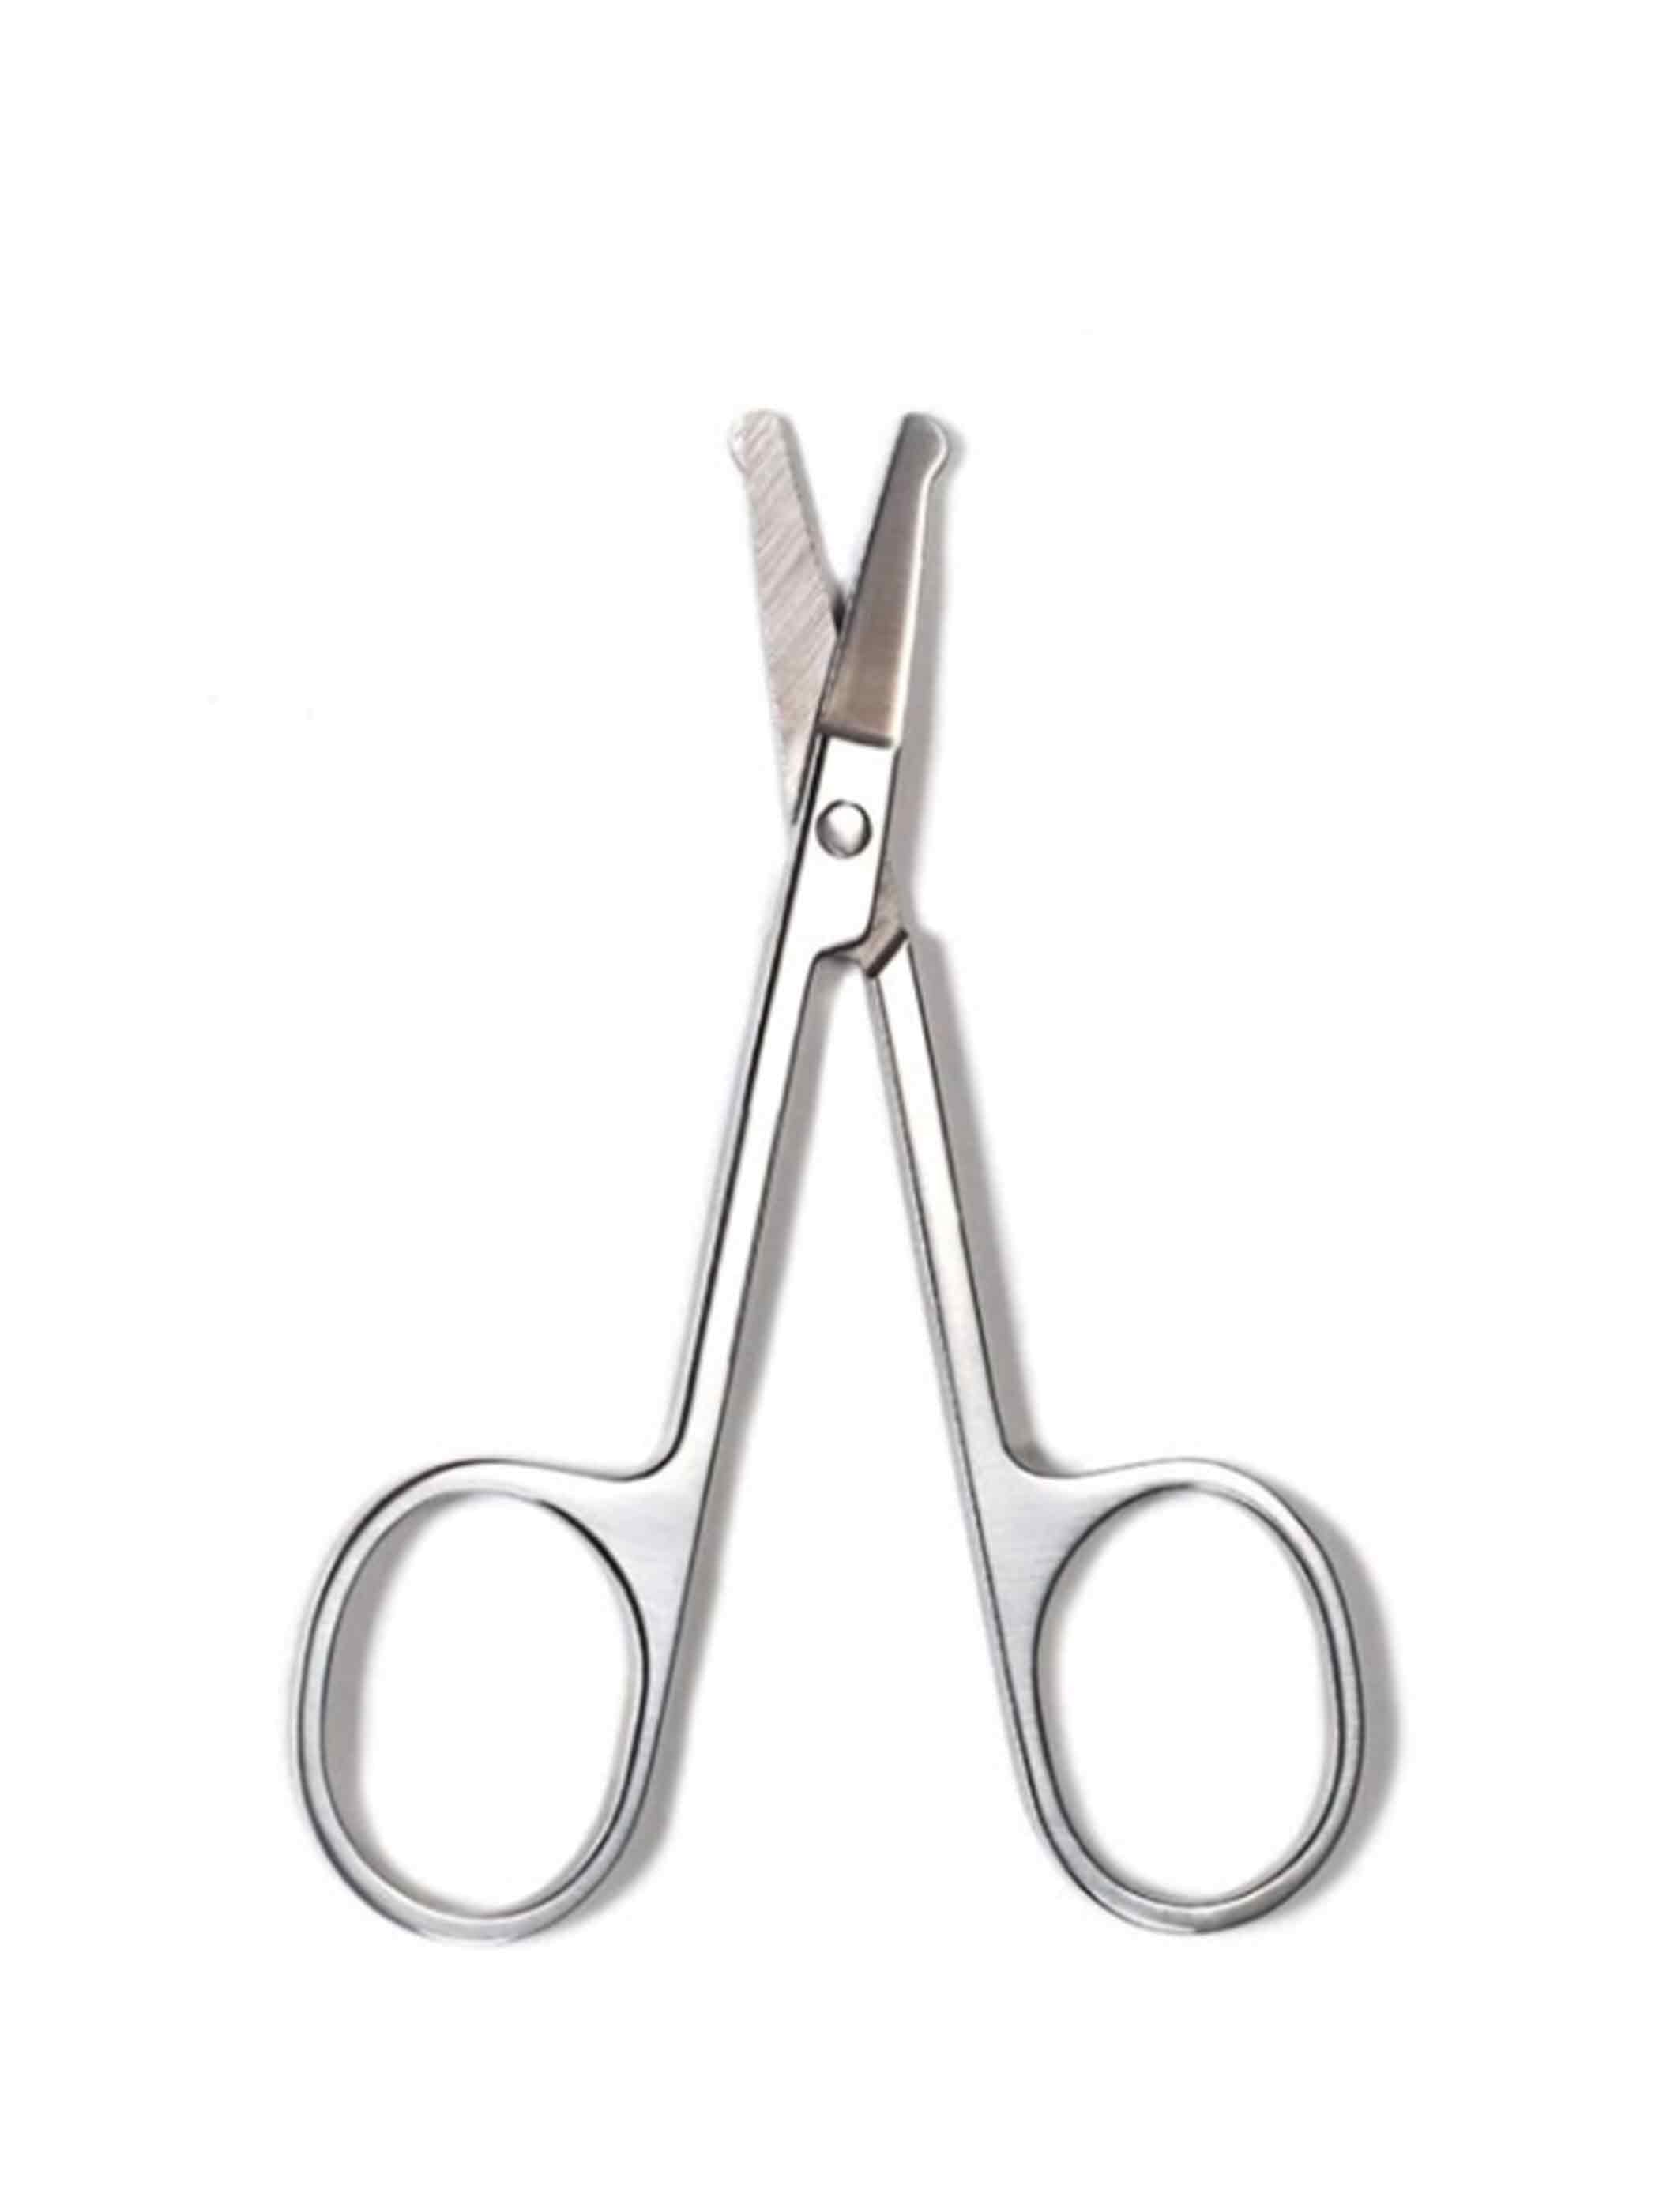 Silver false lash scissors, 